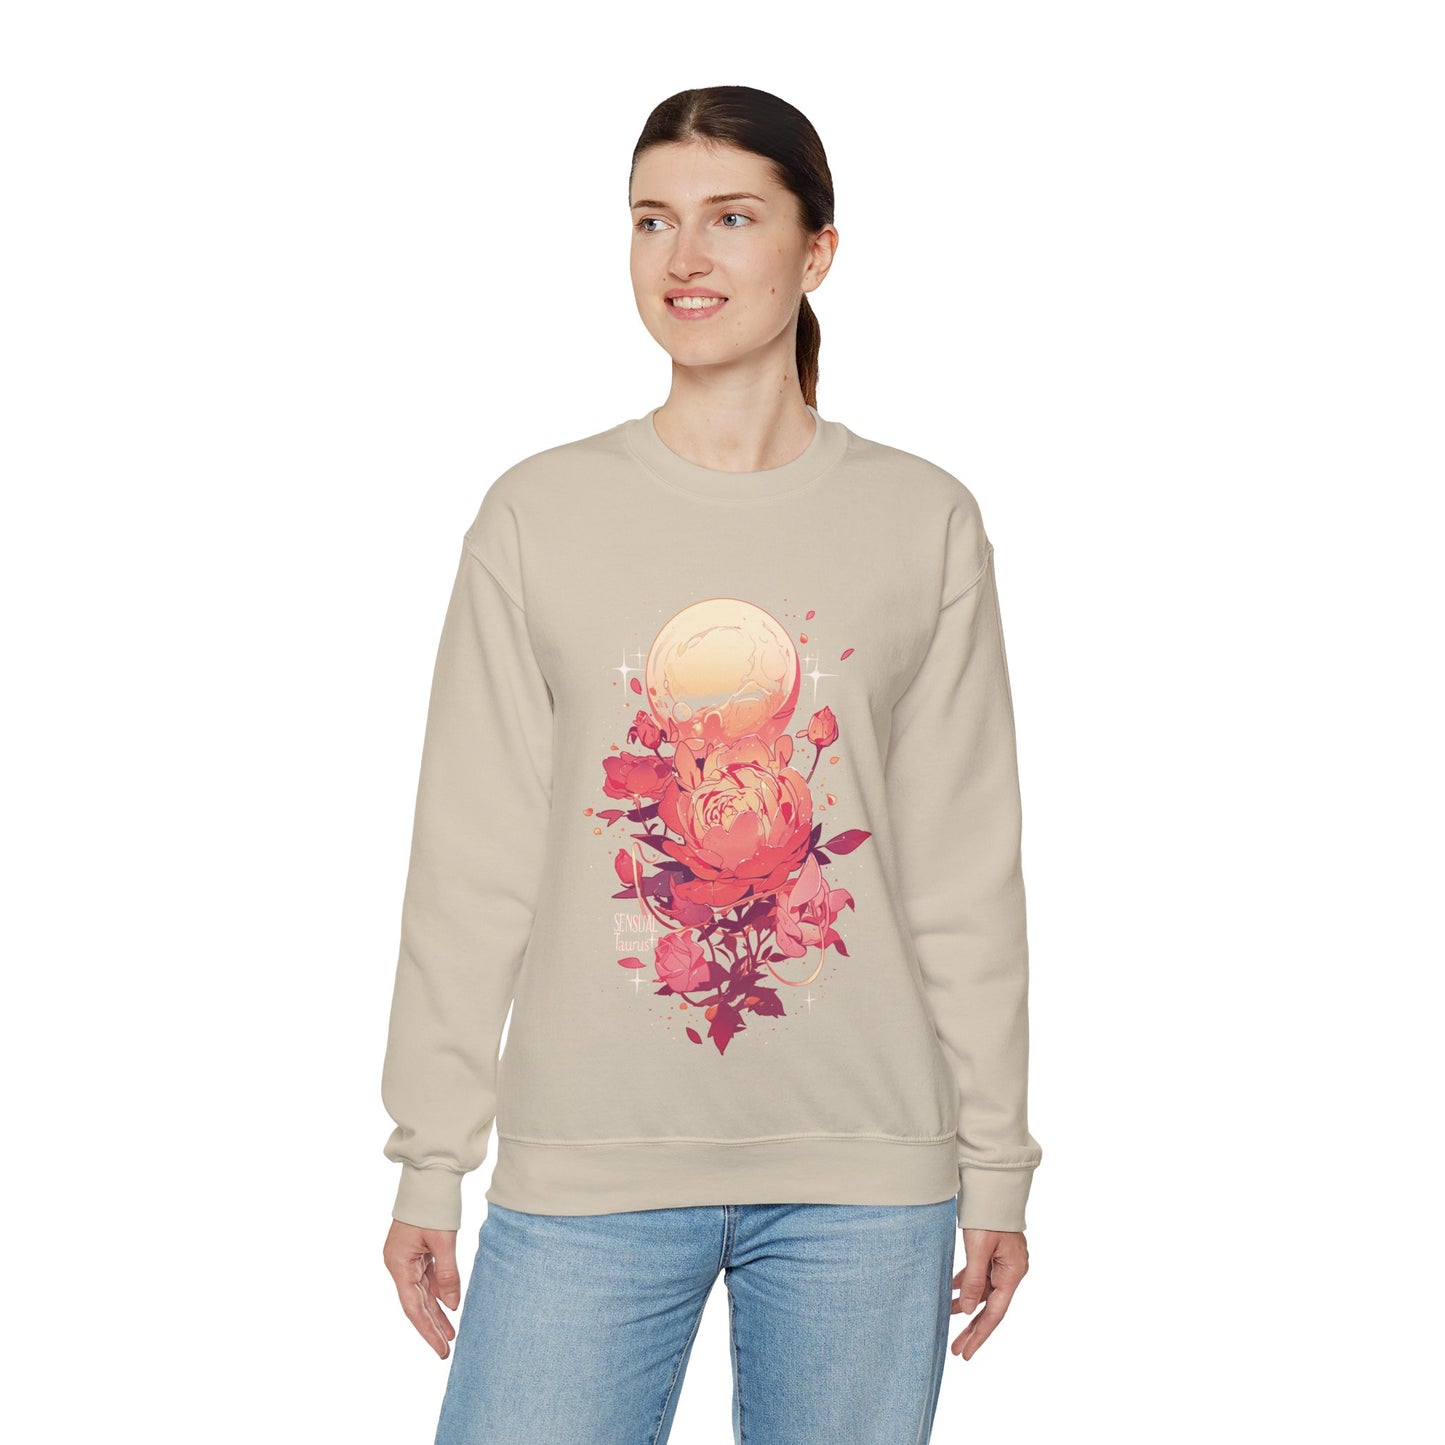 Celestial Sensuality: Venus in Taurus Sweater